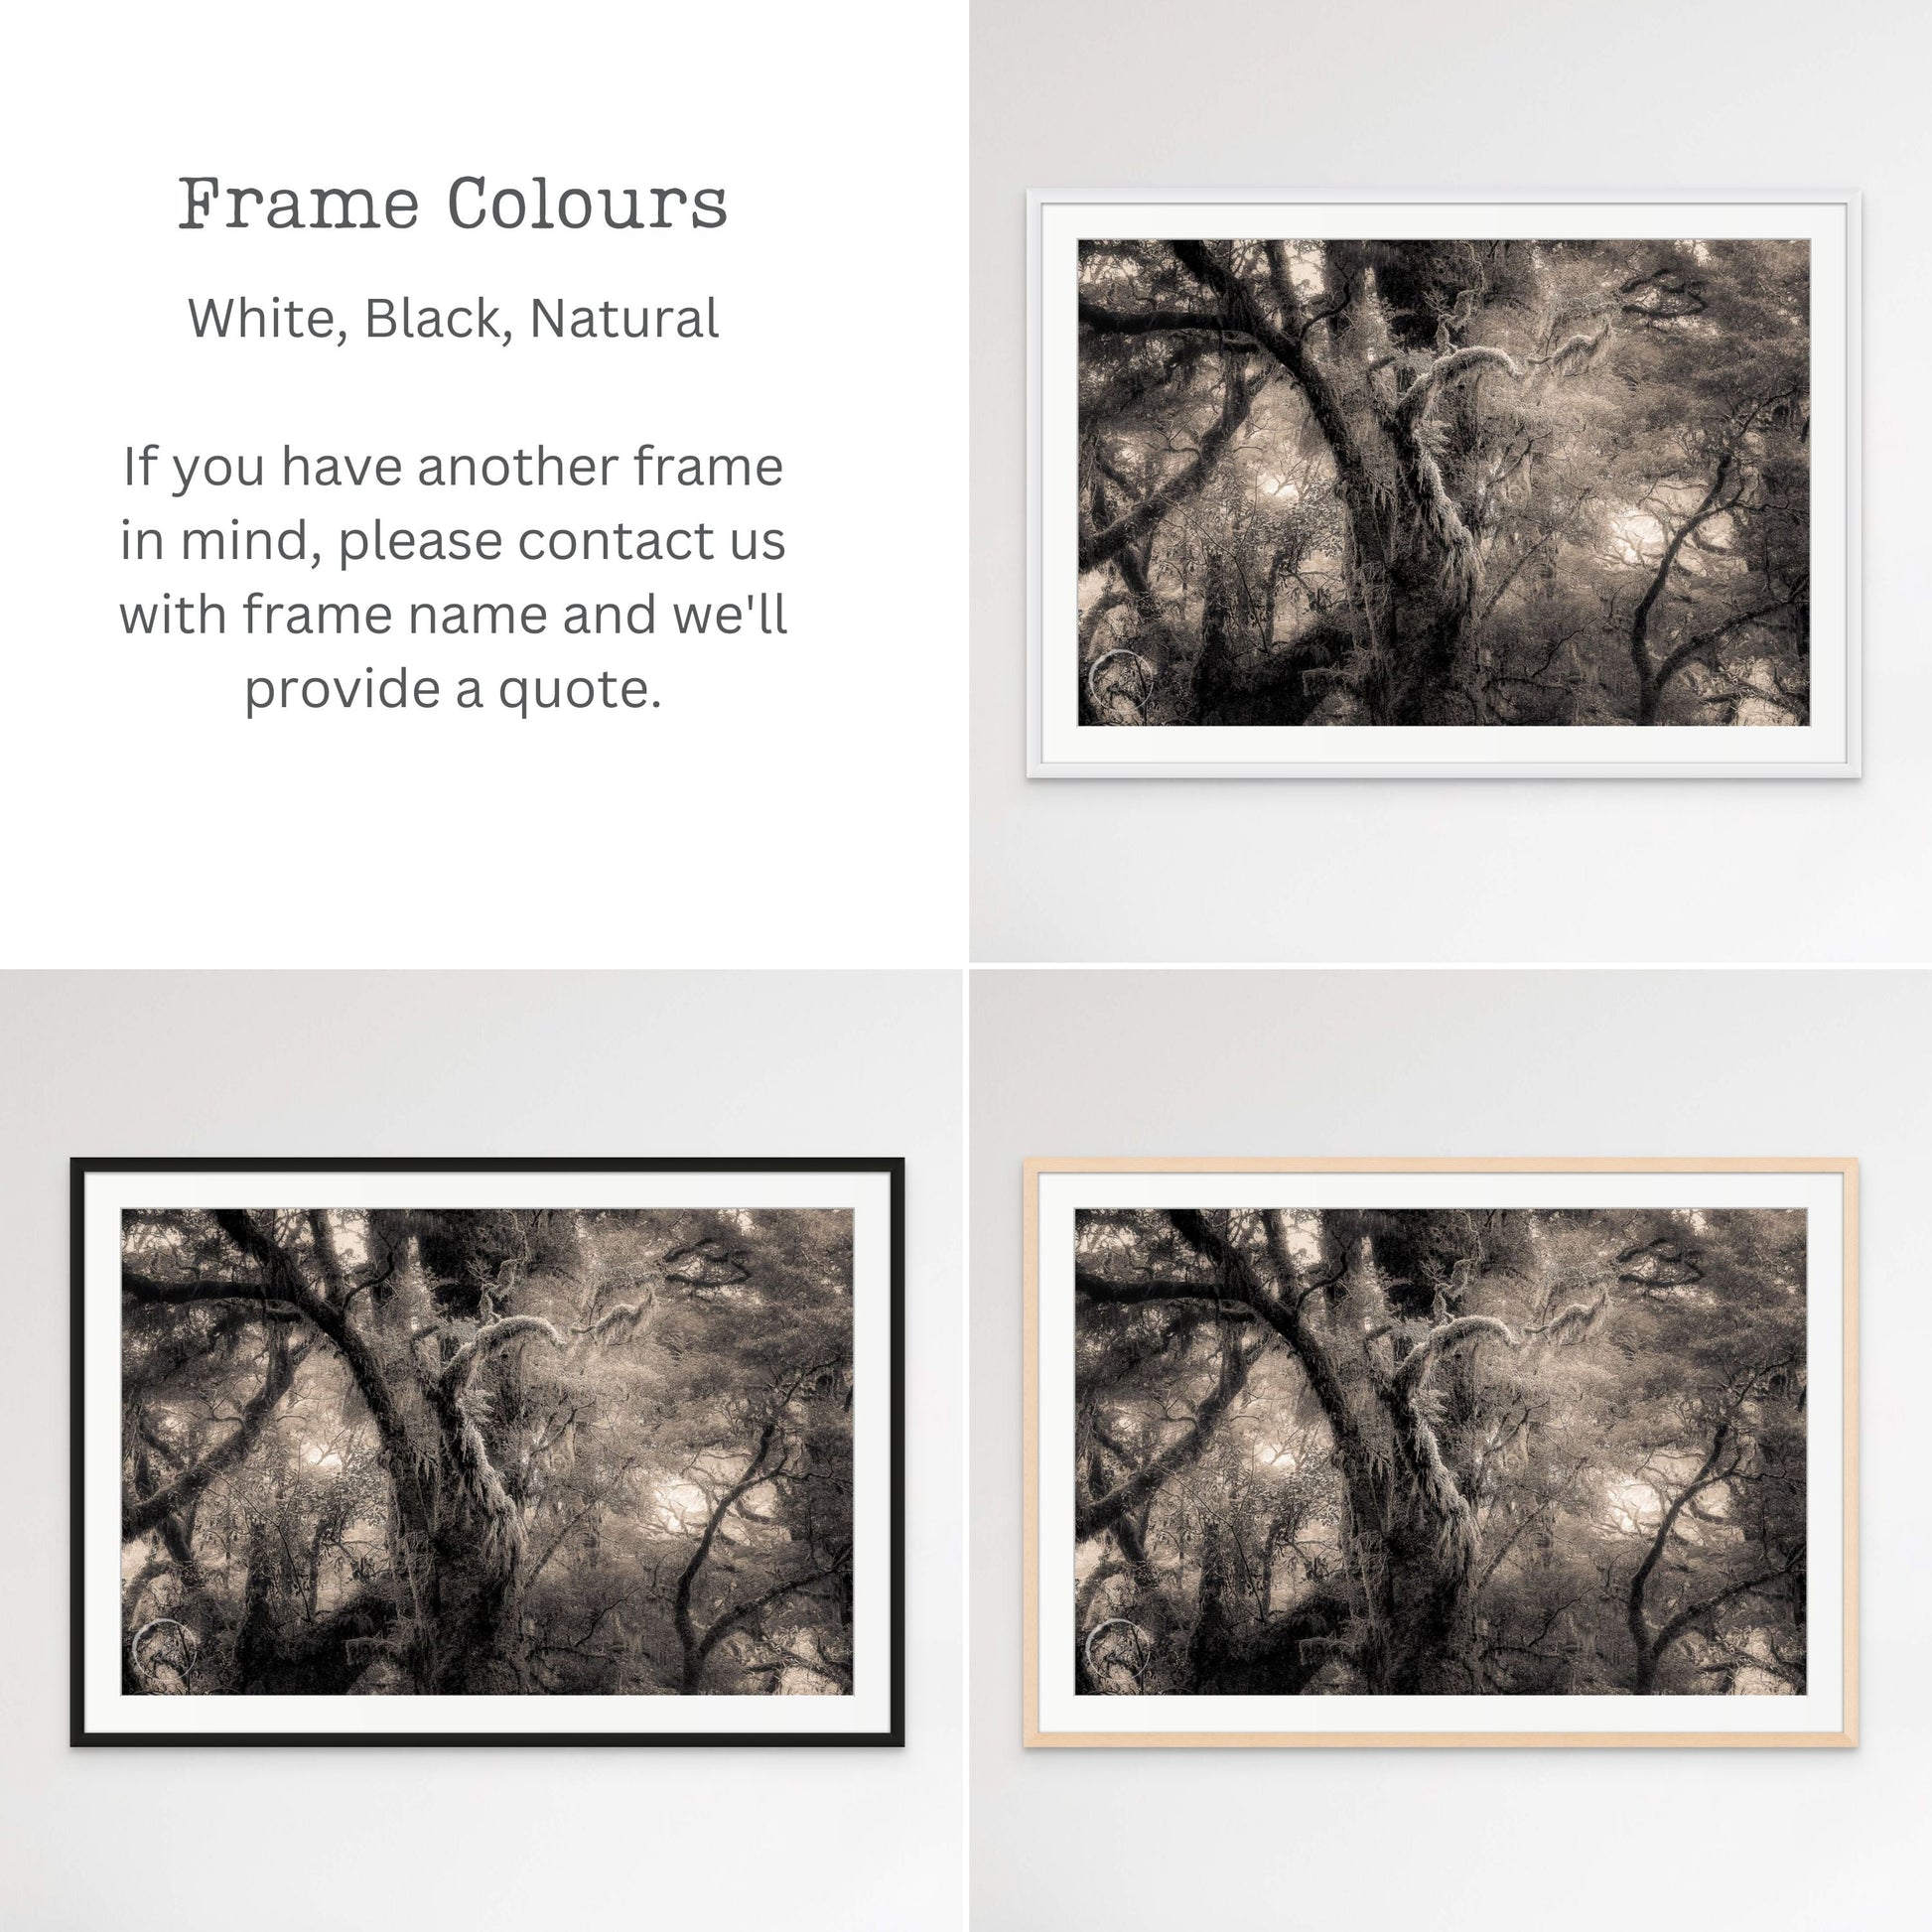 Frames Colours - Fiordland Forest Milford Sound NZ Landscape Prints by Kirsten Clark